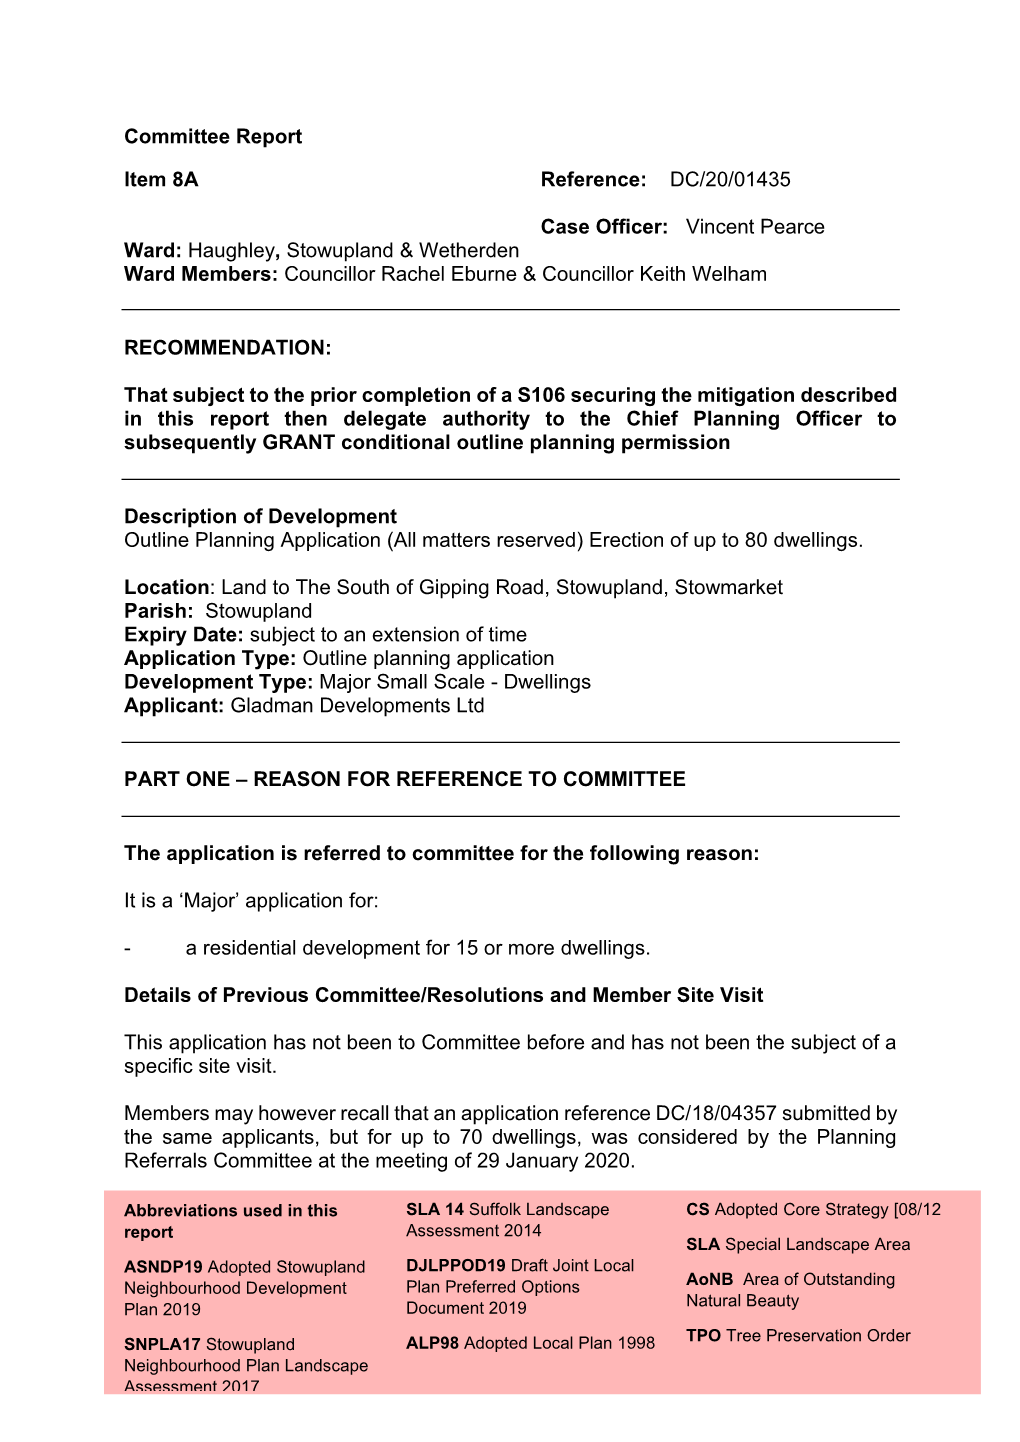 Committee Report Ward: Haughley, Stowupland & Wetherden Ward Members: Councillor Rachel Eburne & Councillor Keith Welham